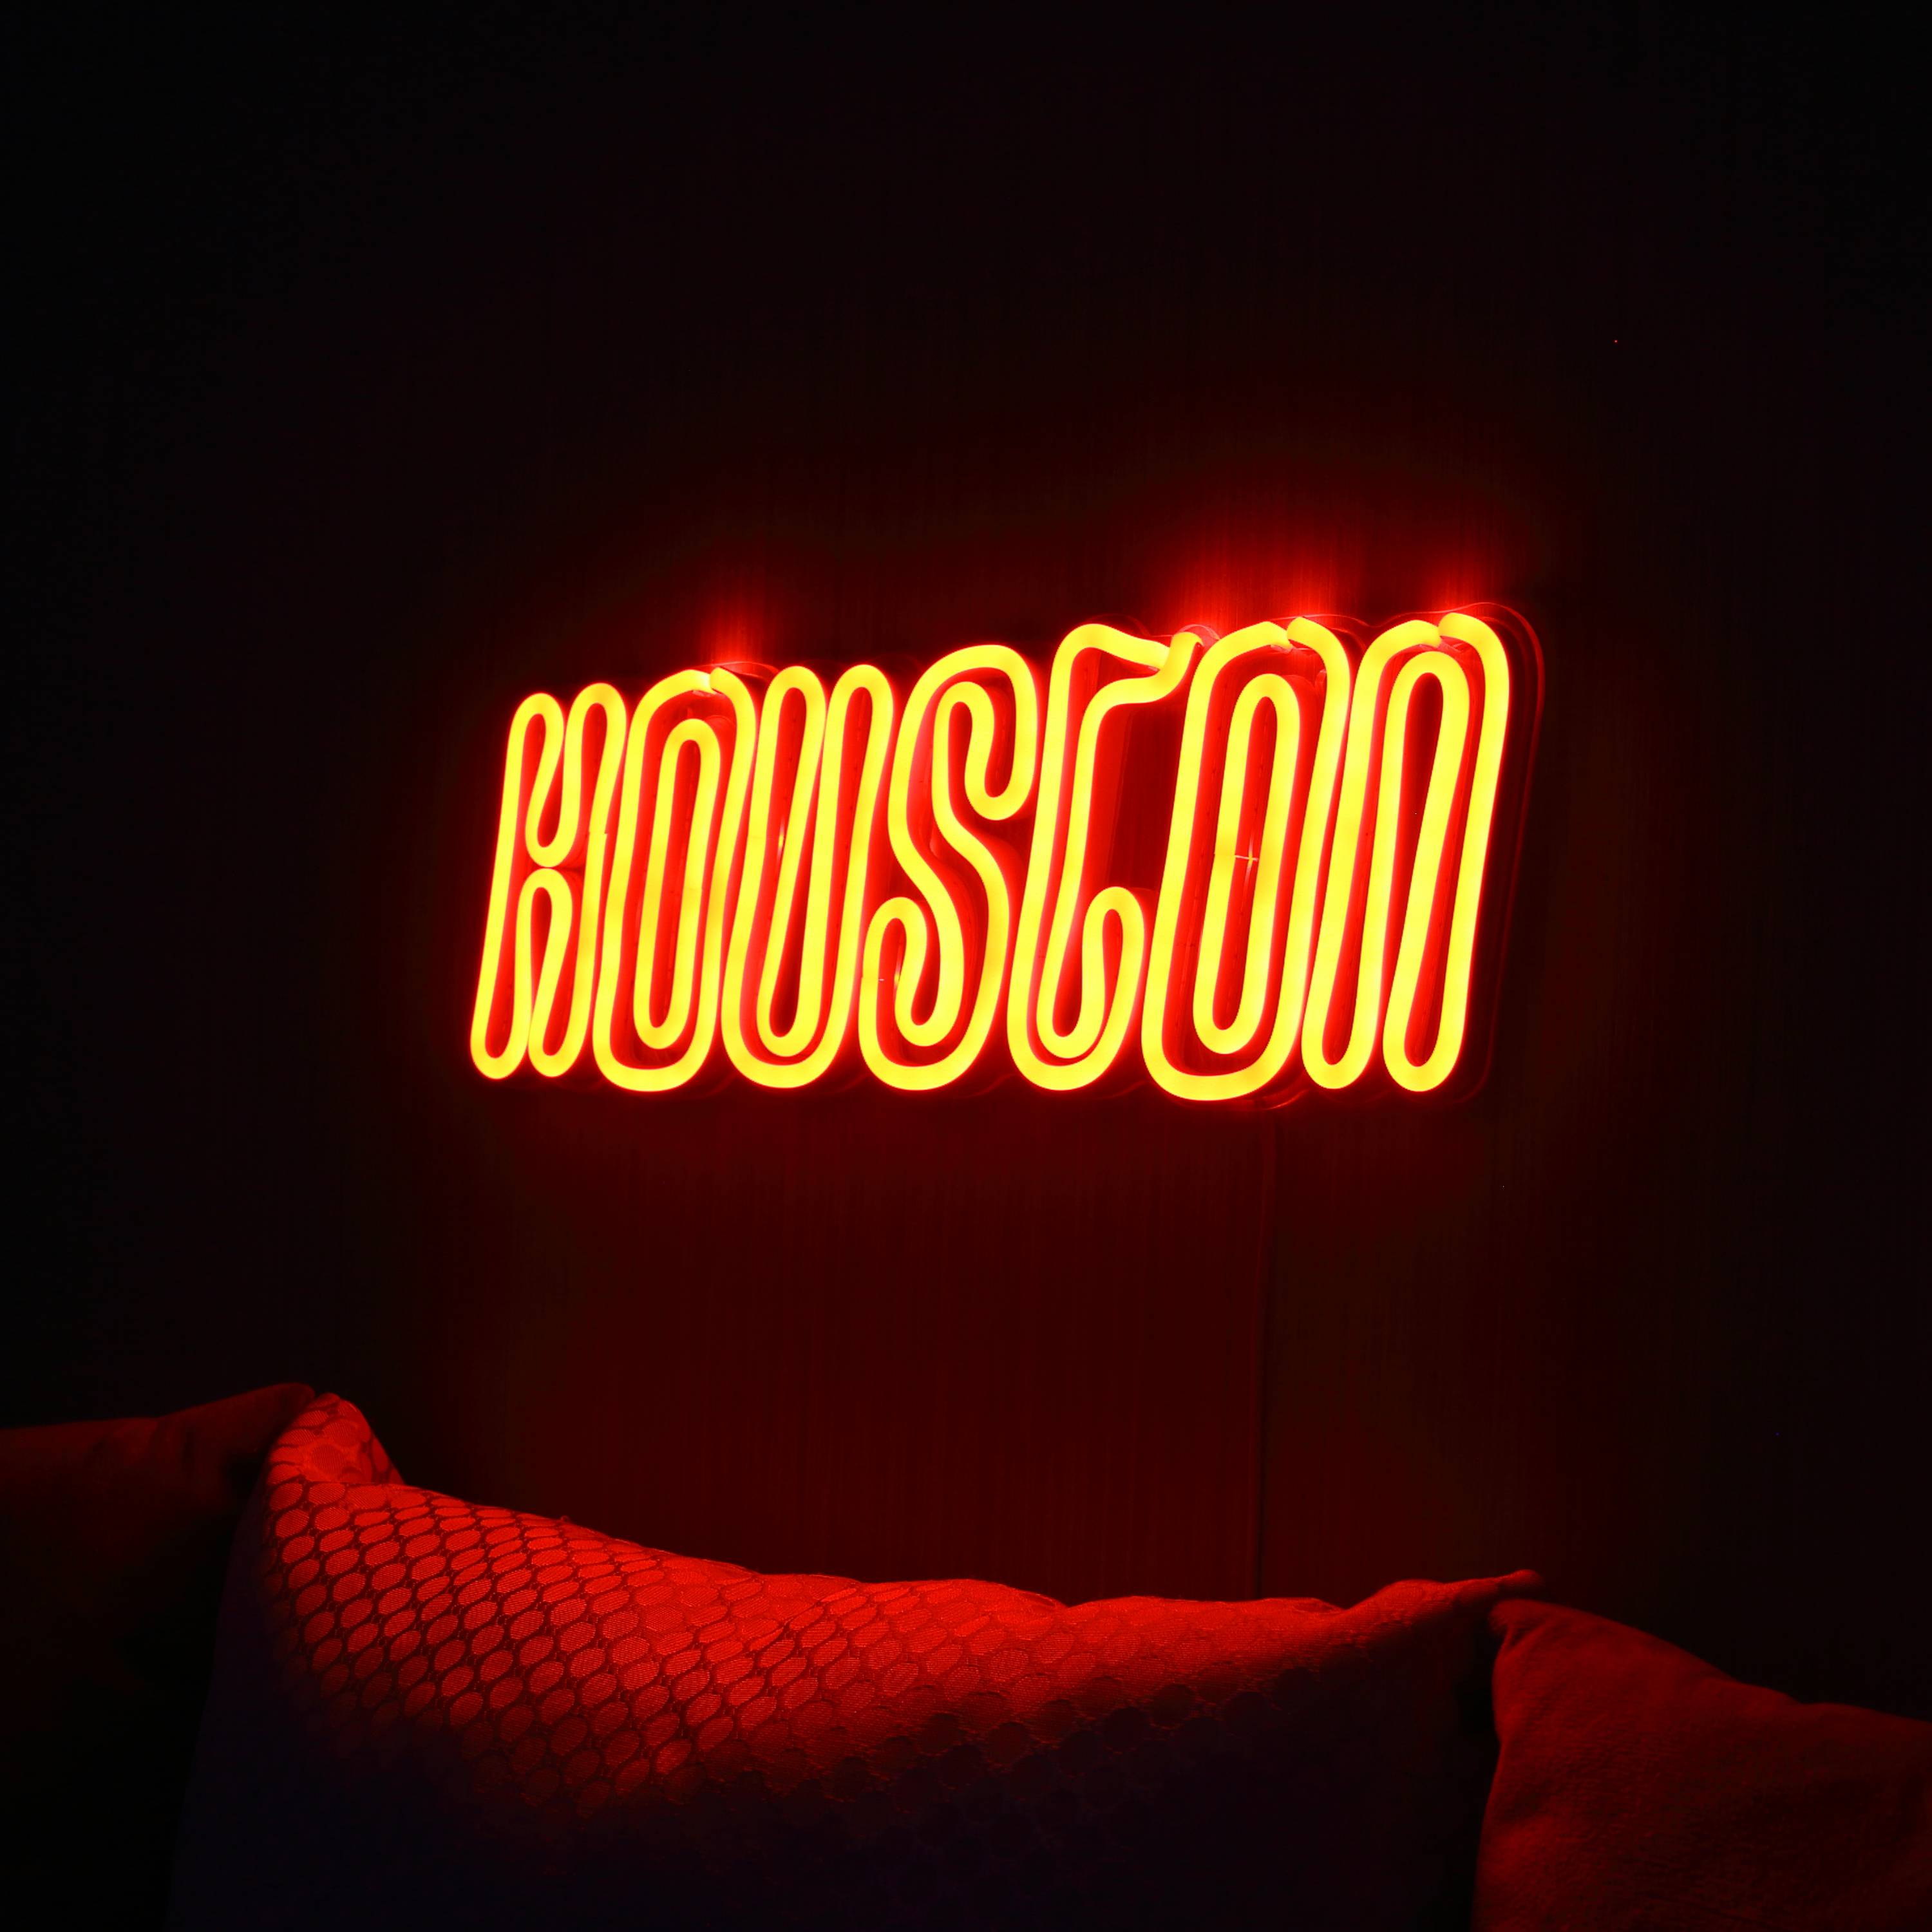 NBA Houston Rockets Large Flex Neon LED Sign